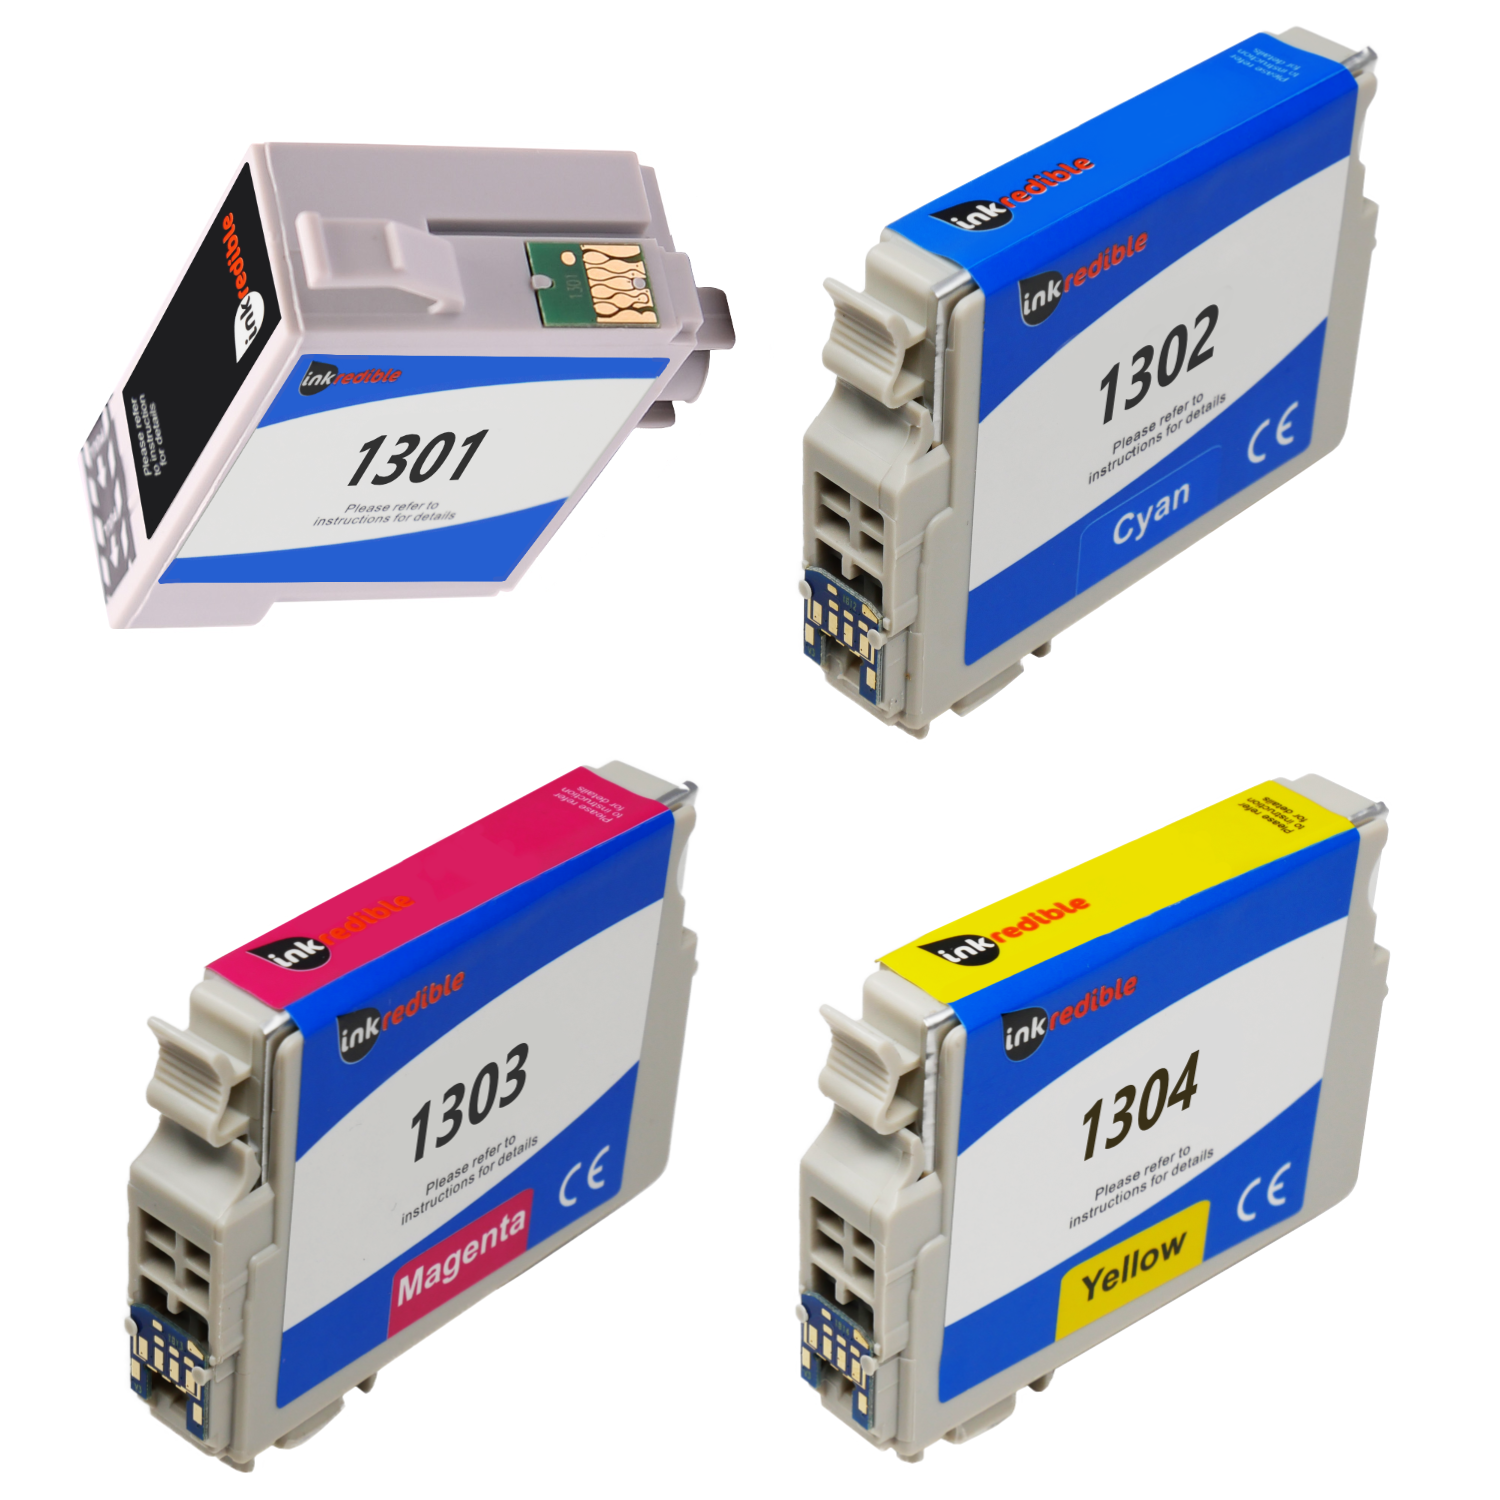 Epson WF-7515 Ink Cartridges